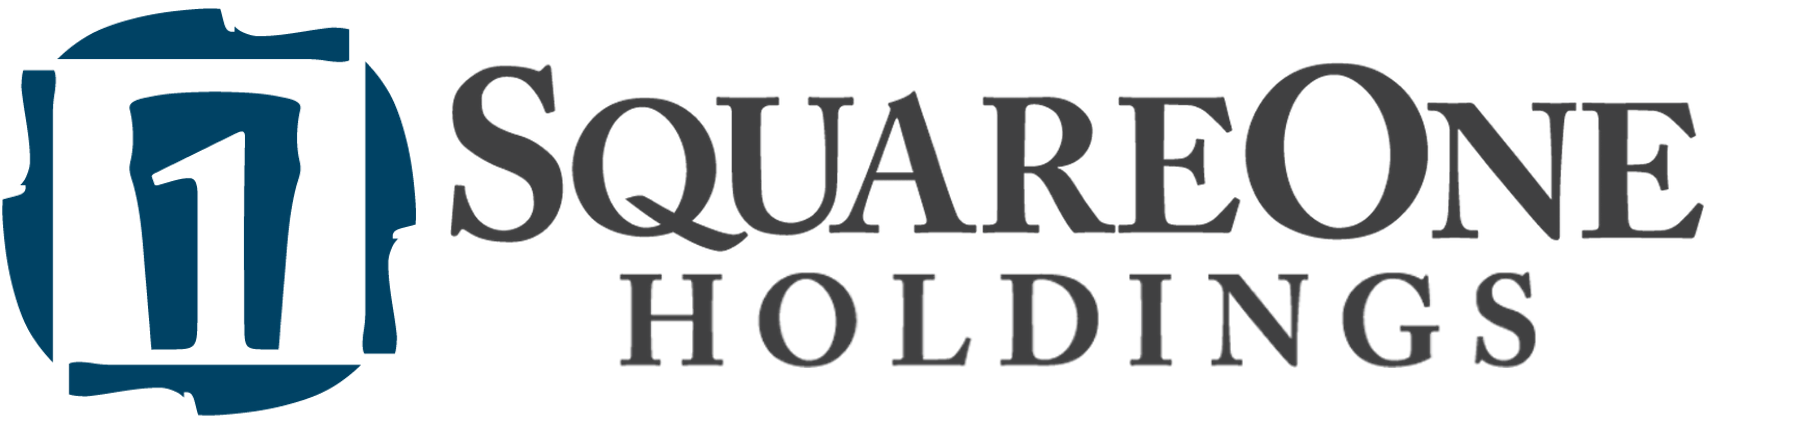 SquareOne Holding Company Logo